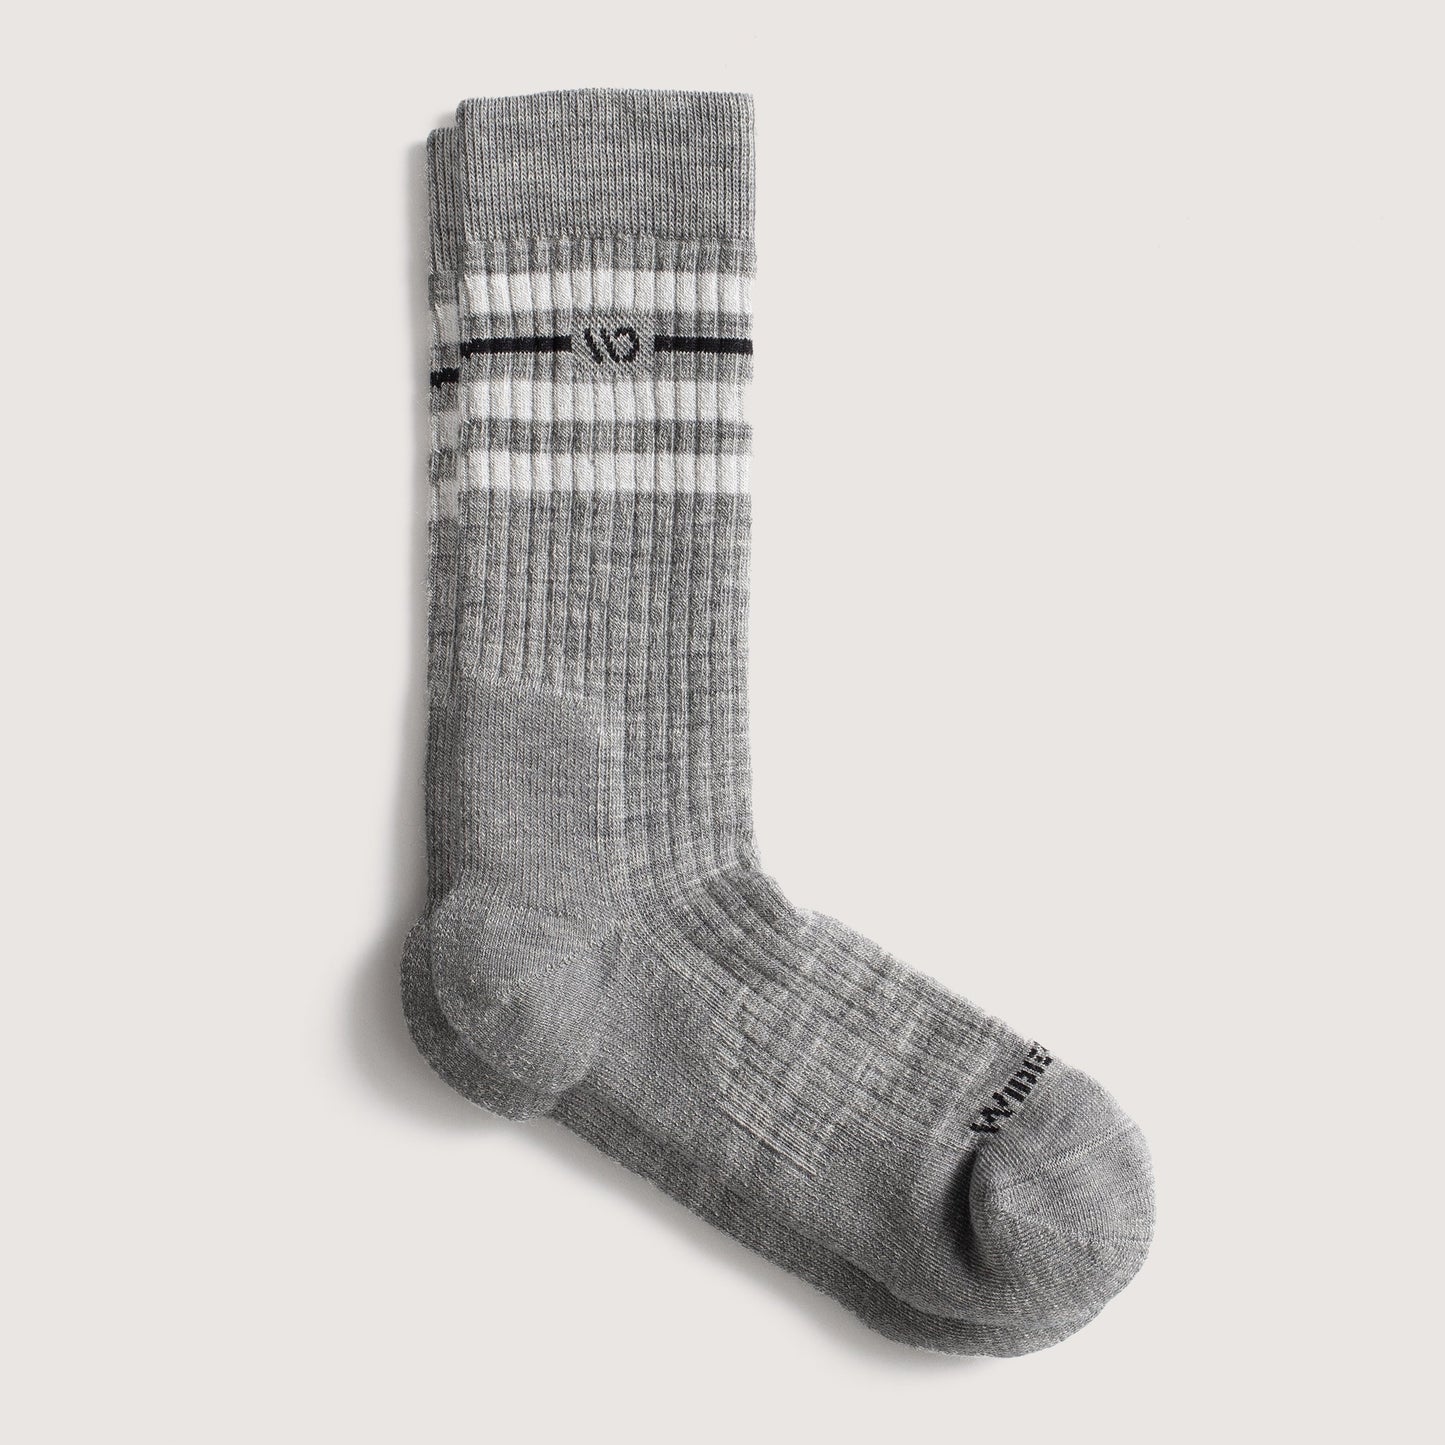 Flat socks featuring black logo, light gray body, white stripes below the cuff--Light Gray/Denim/Forest